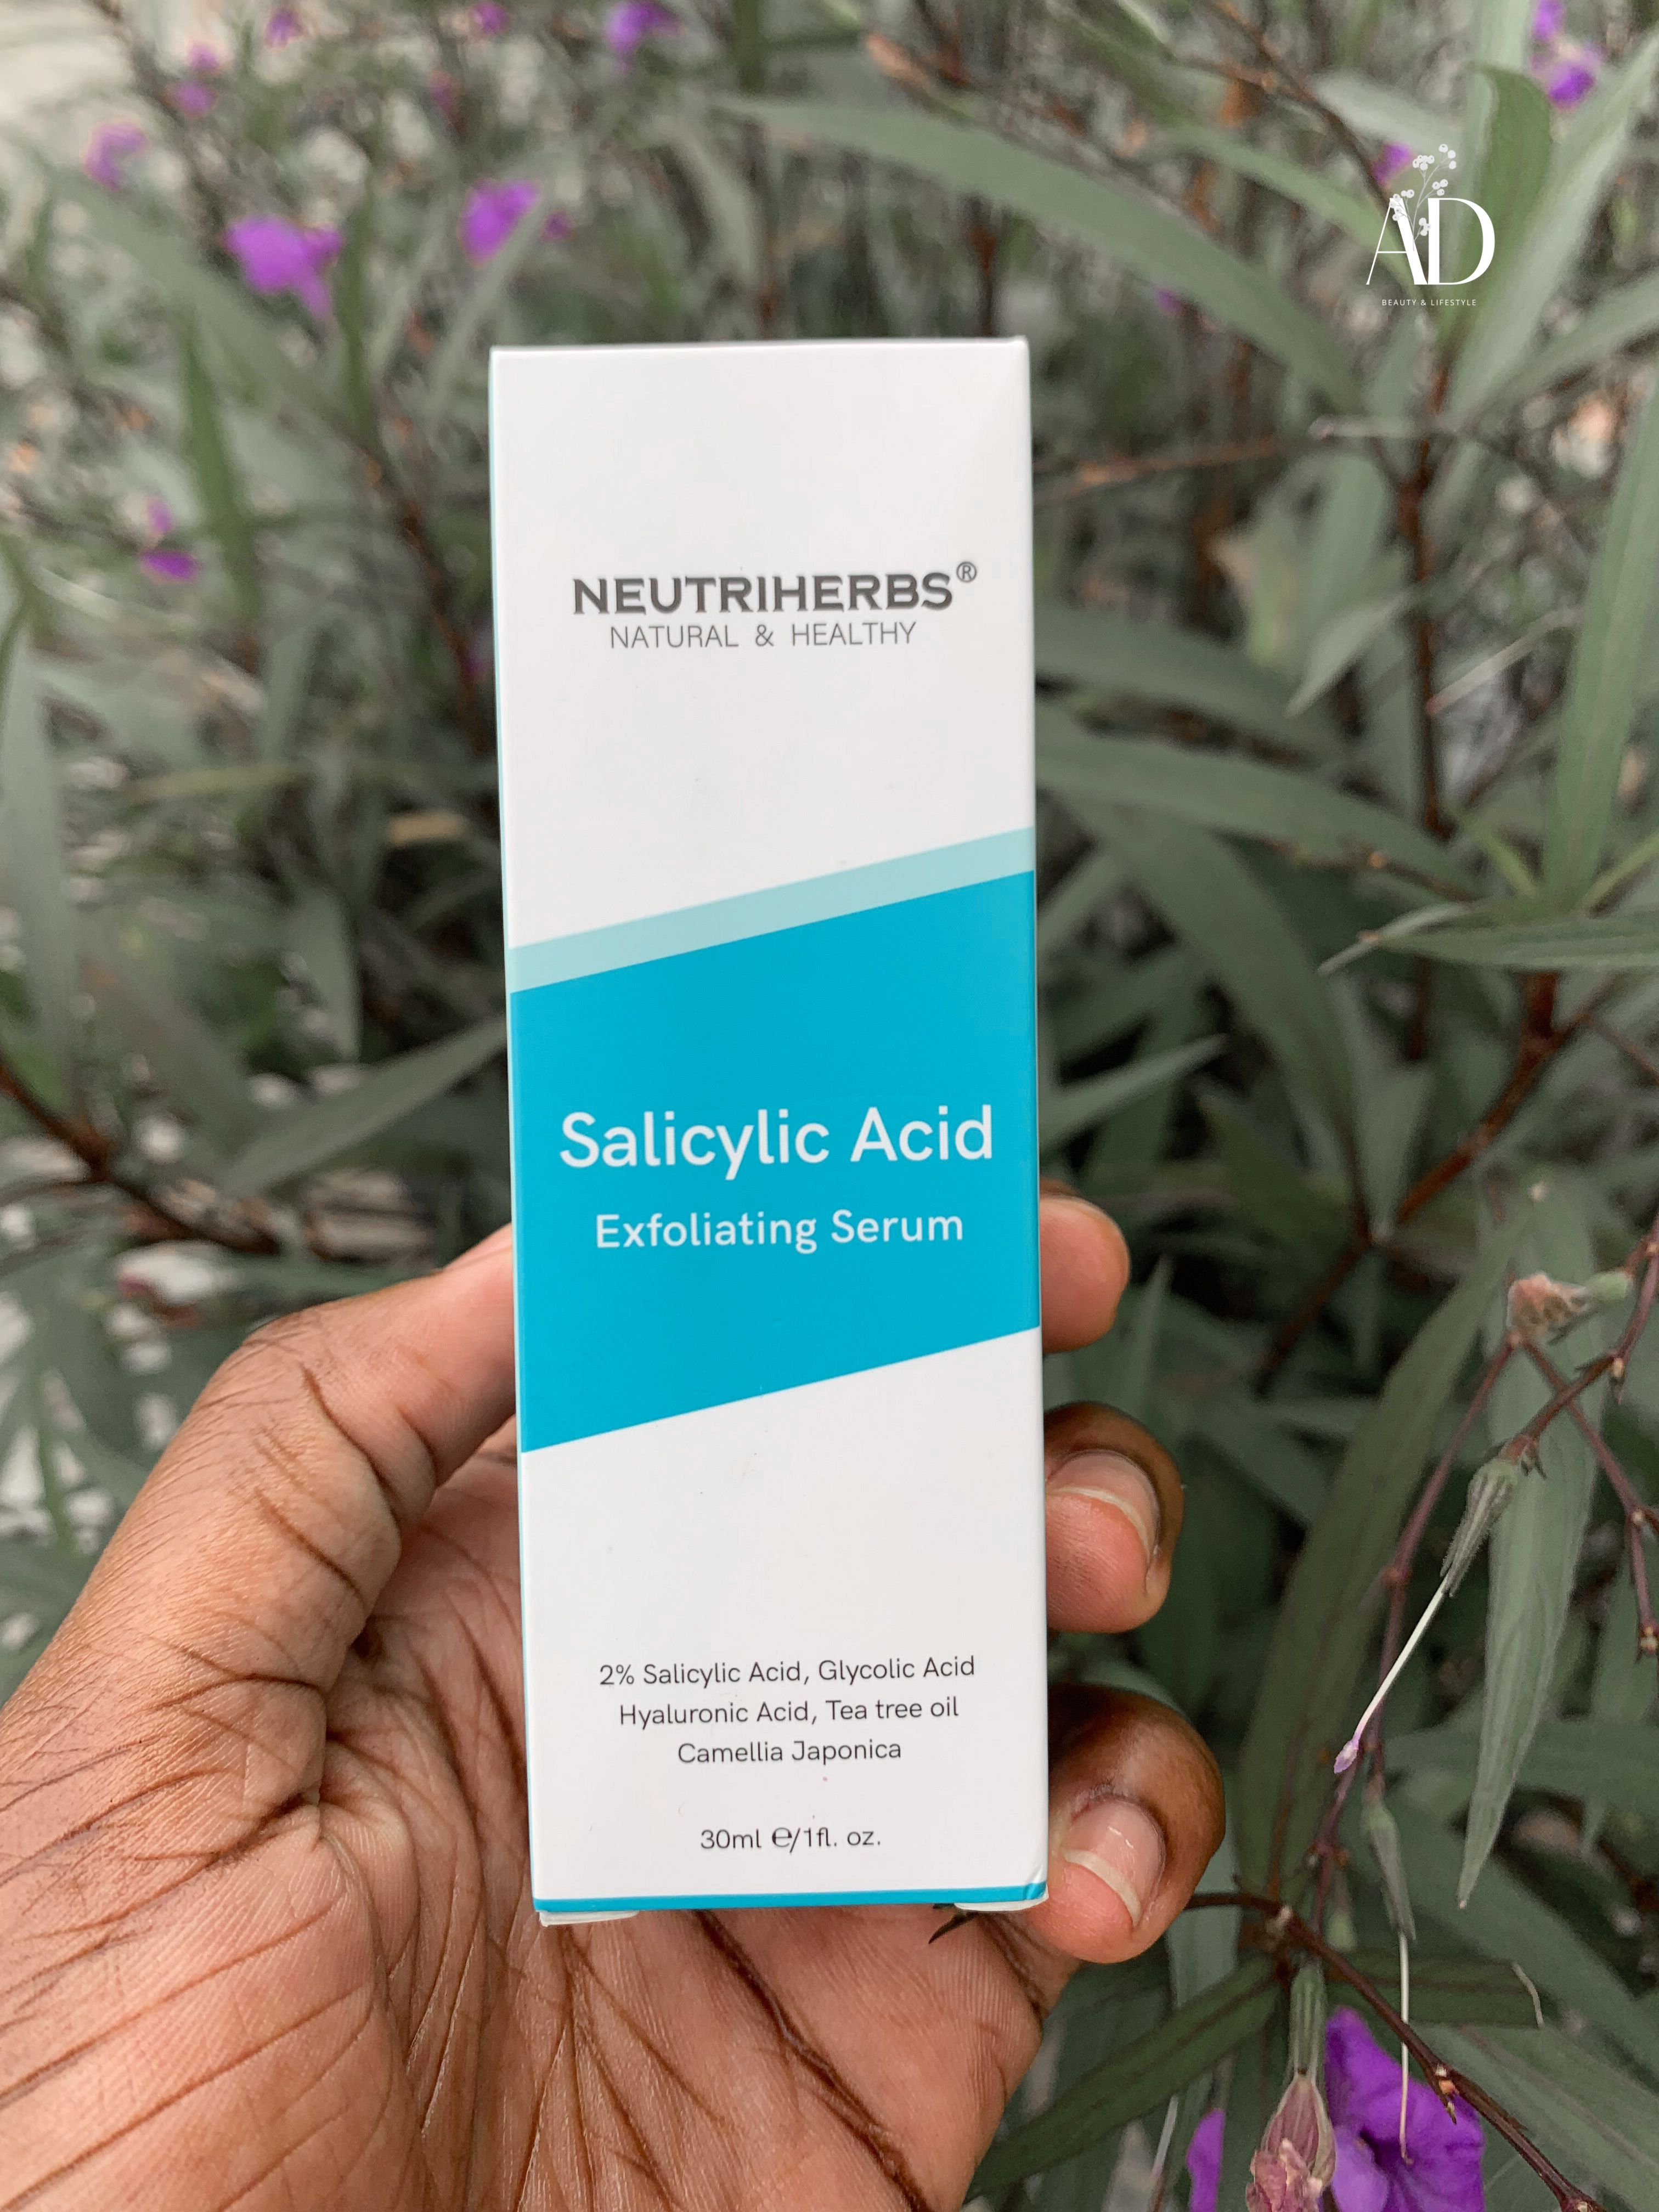 Neutriherbs Salicylic Acid Exfoliating Serum